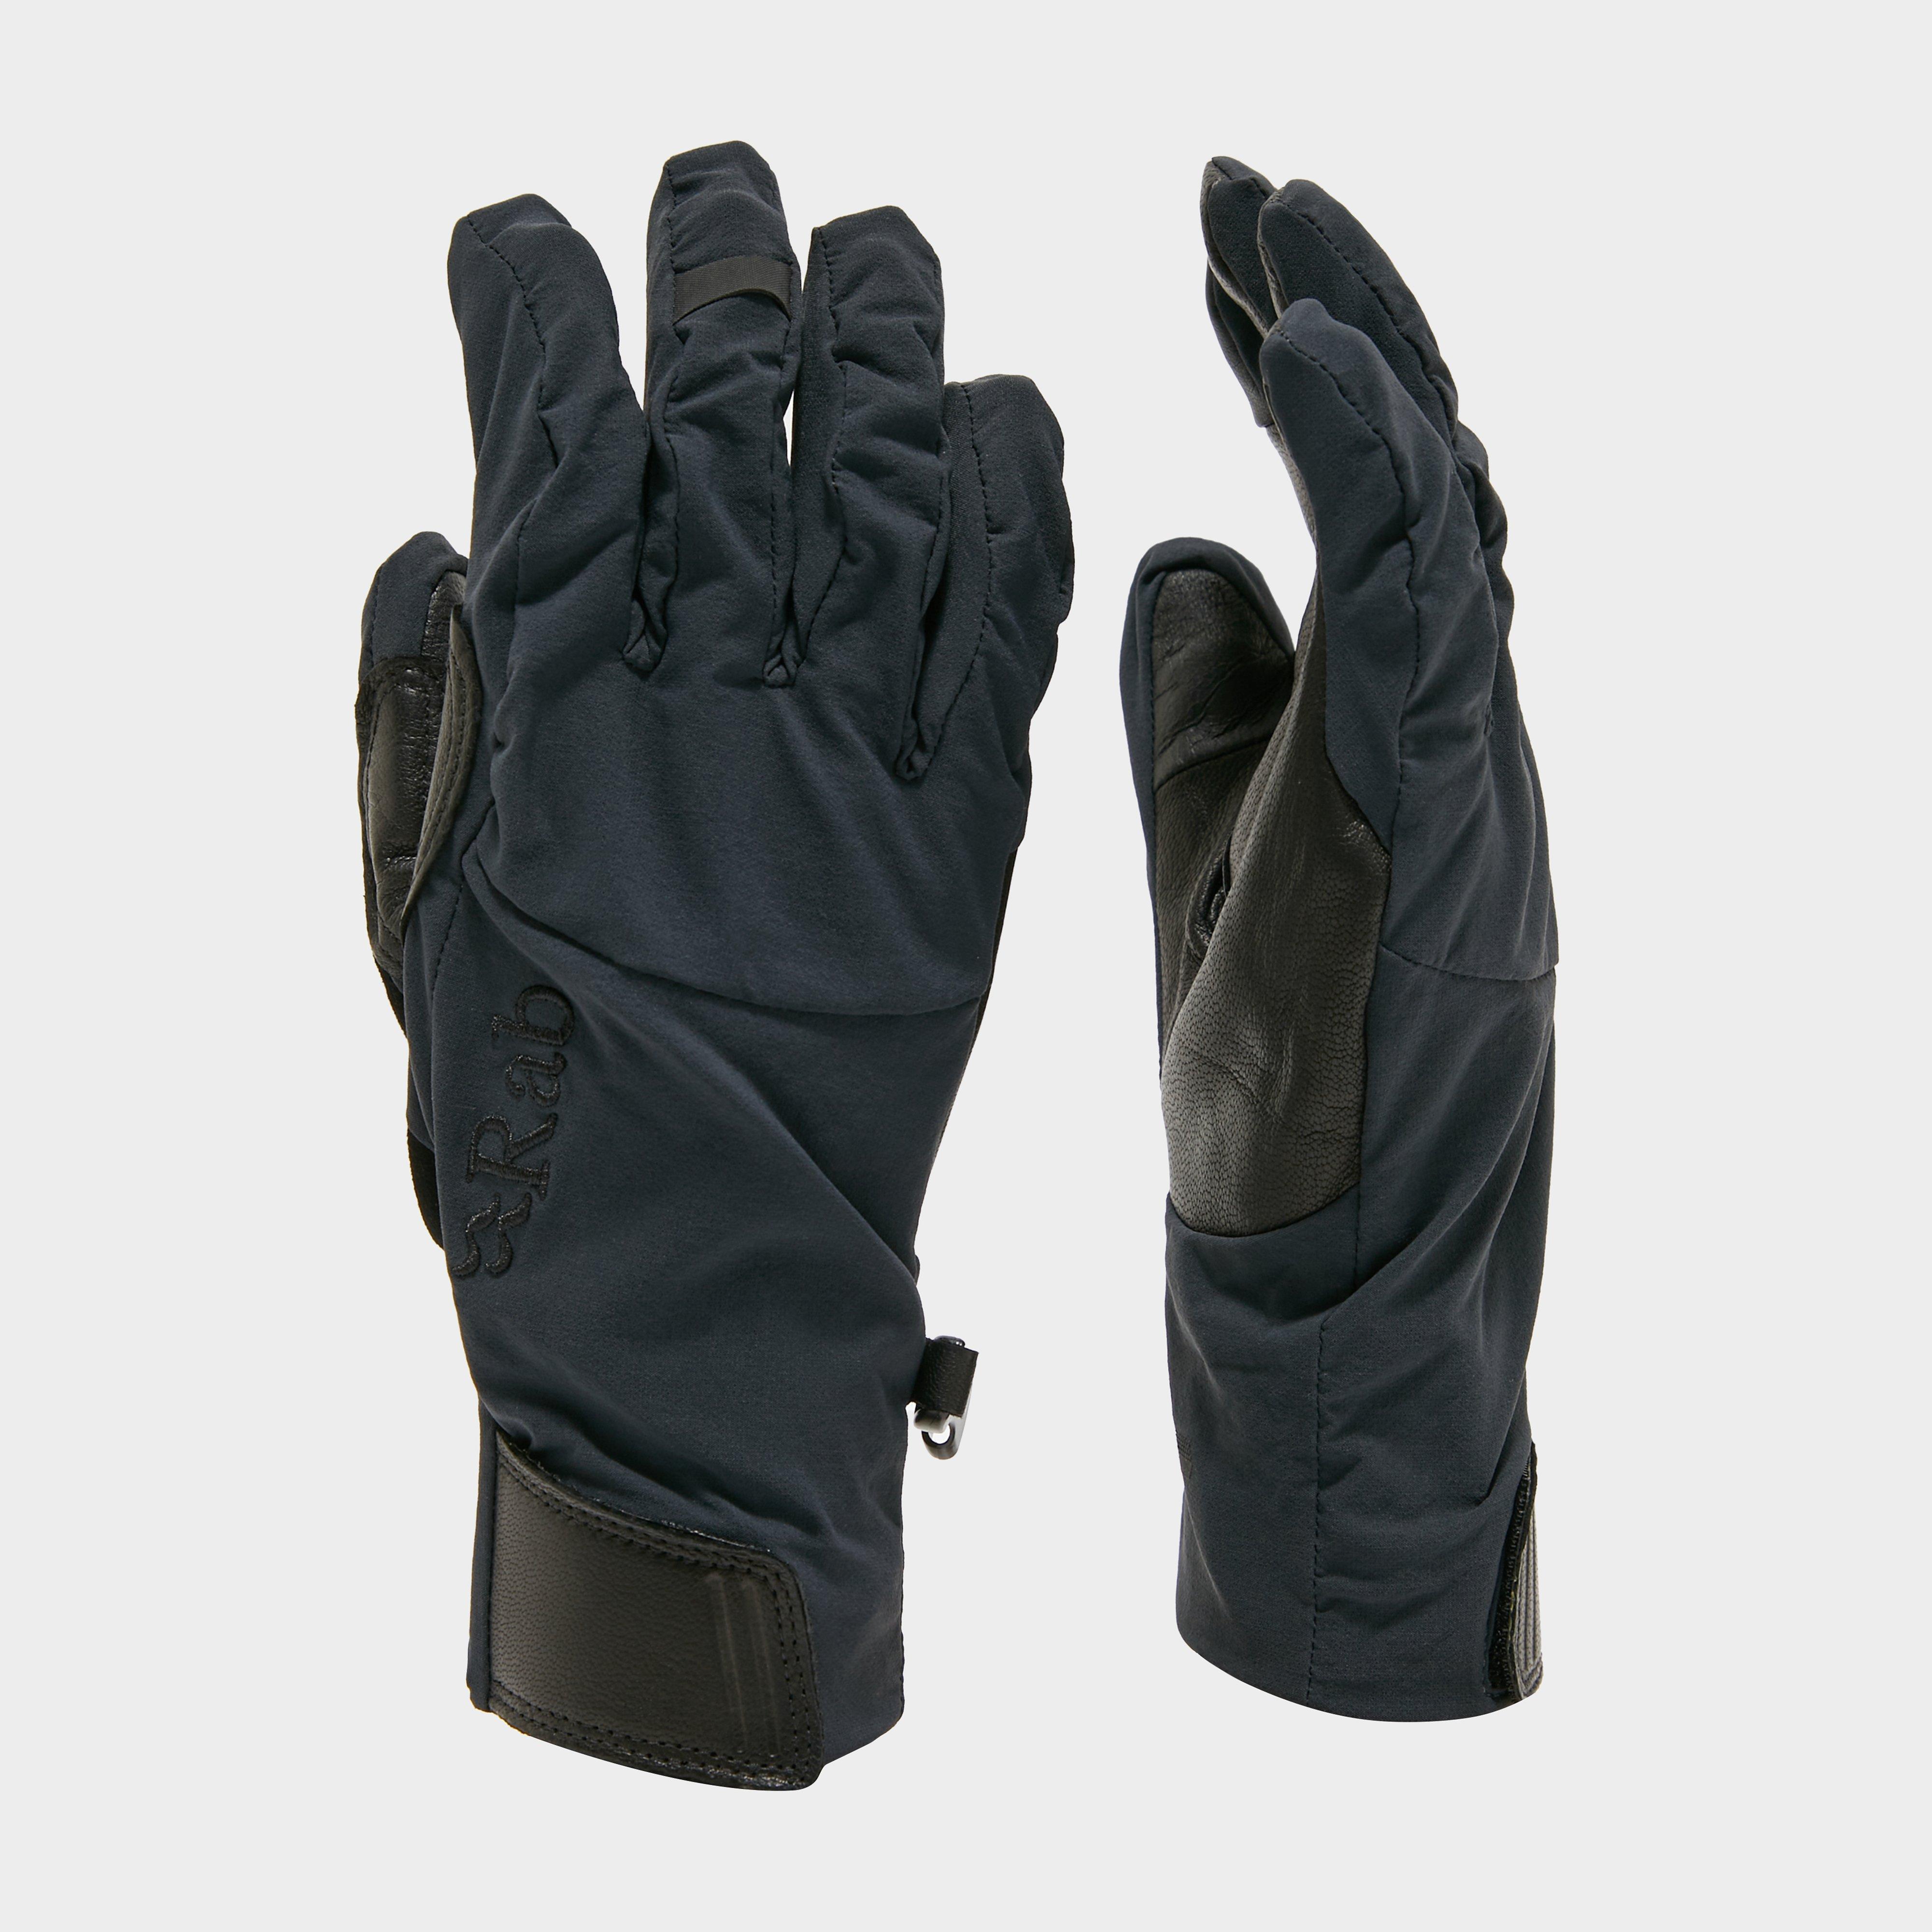  Rab Vapour-rise Glove, Grey